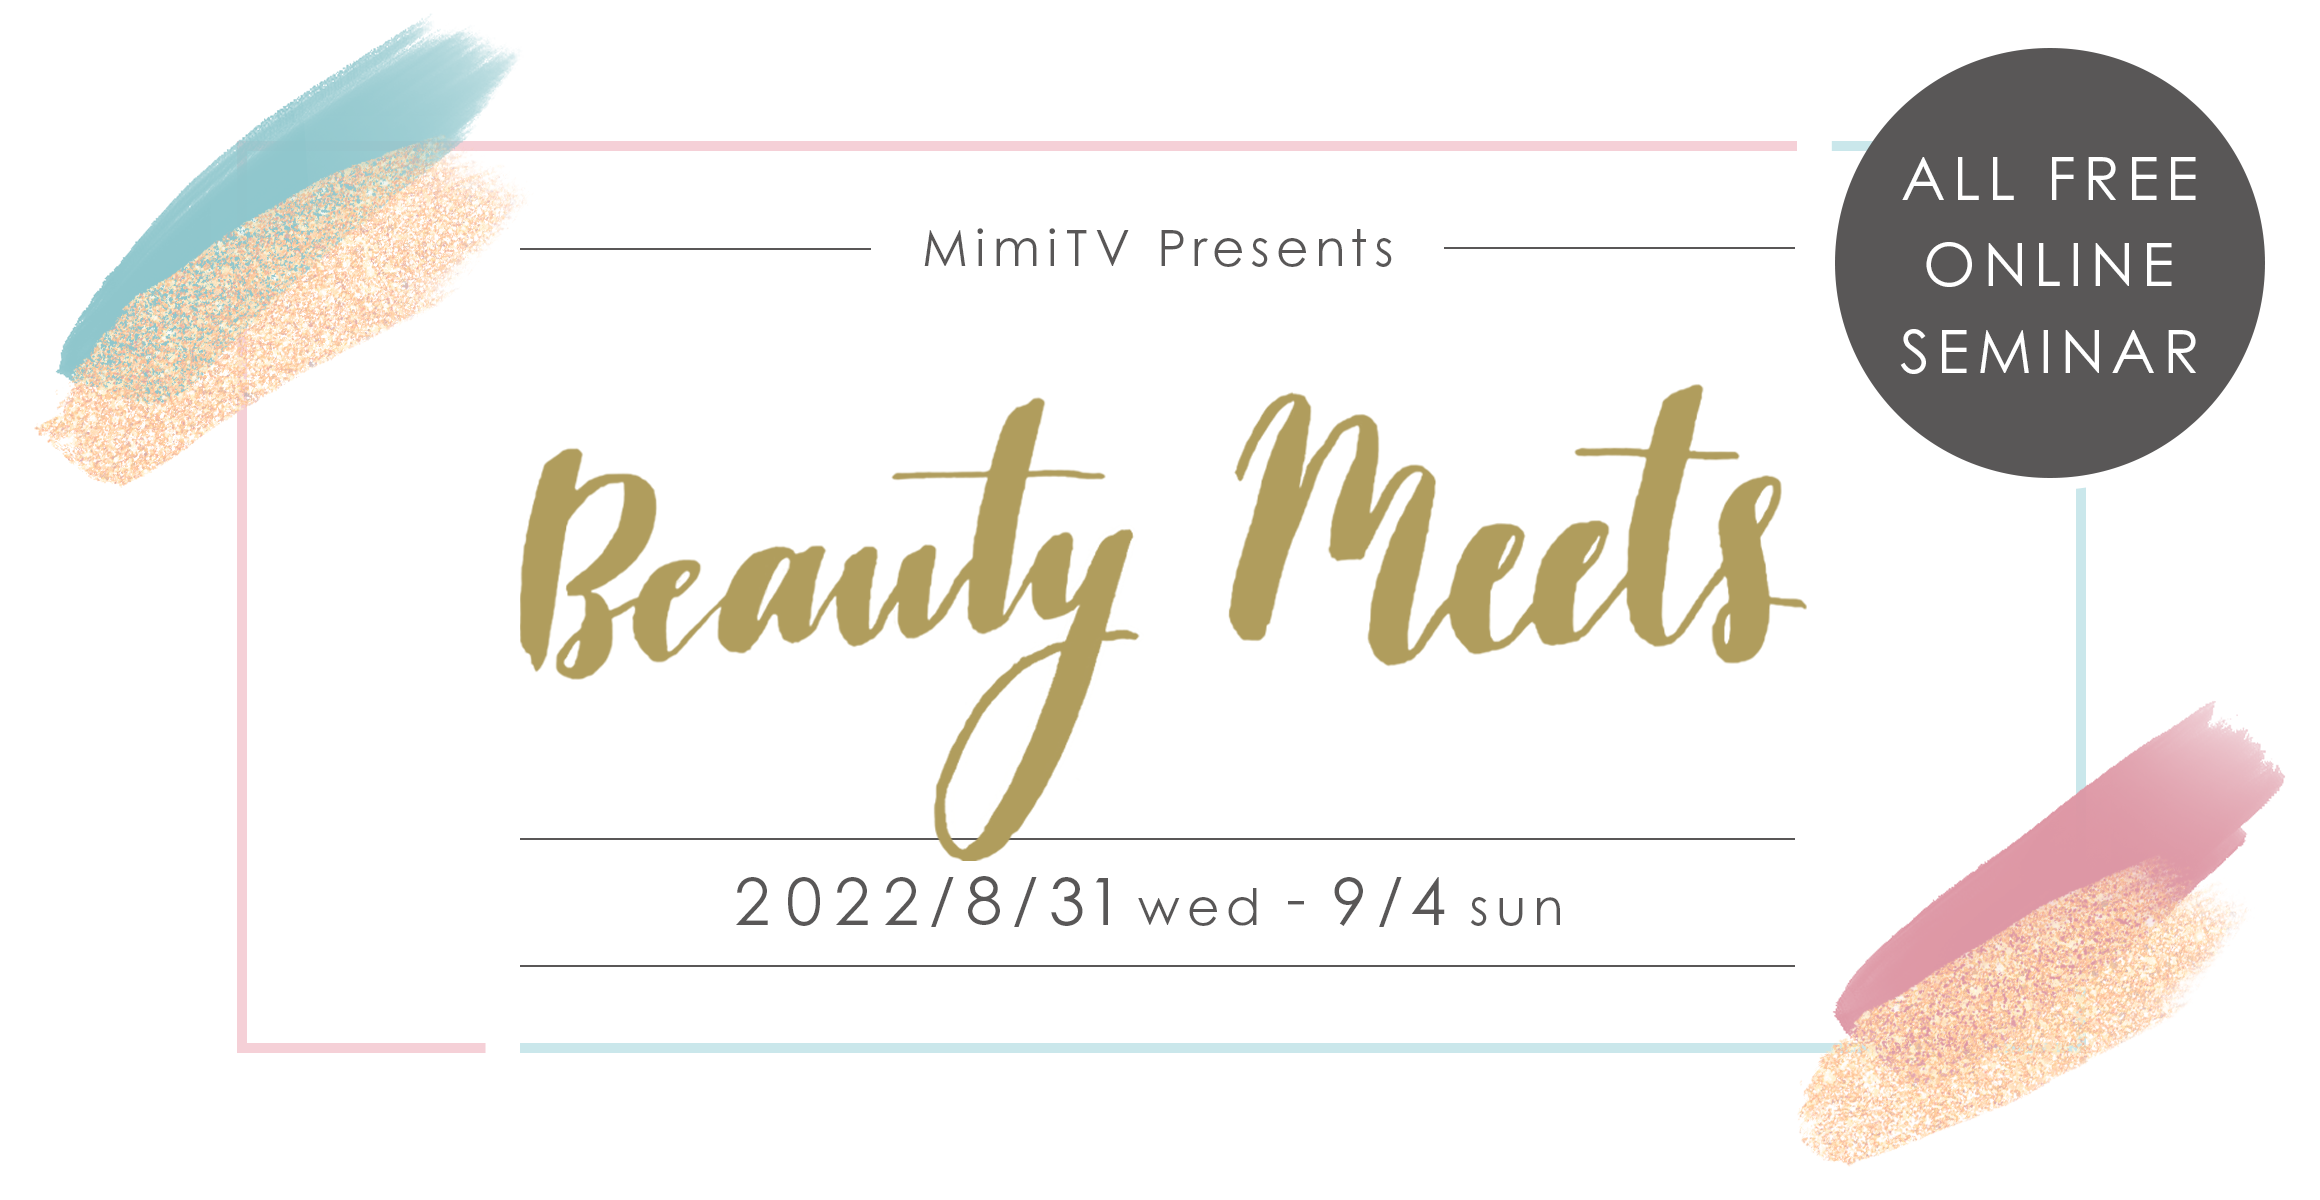 MimiTV Presents Beauty Meets 2022/9/28wed-10/2sun All FREE ONLINE SEMINAR